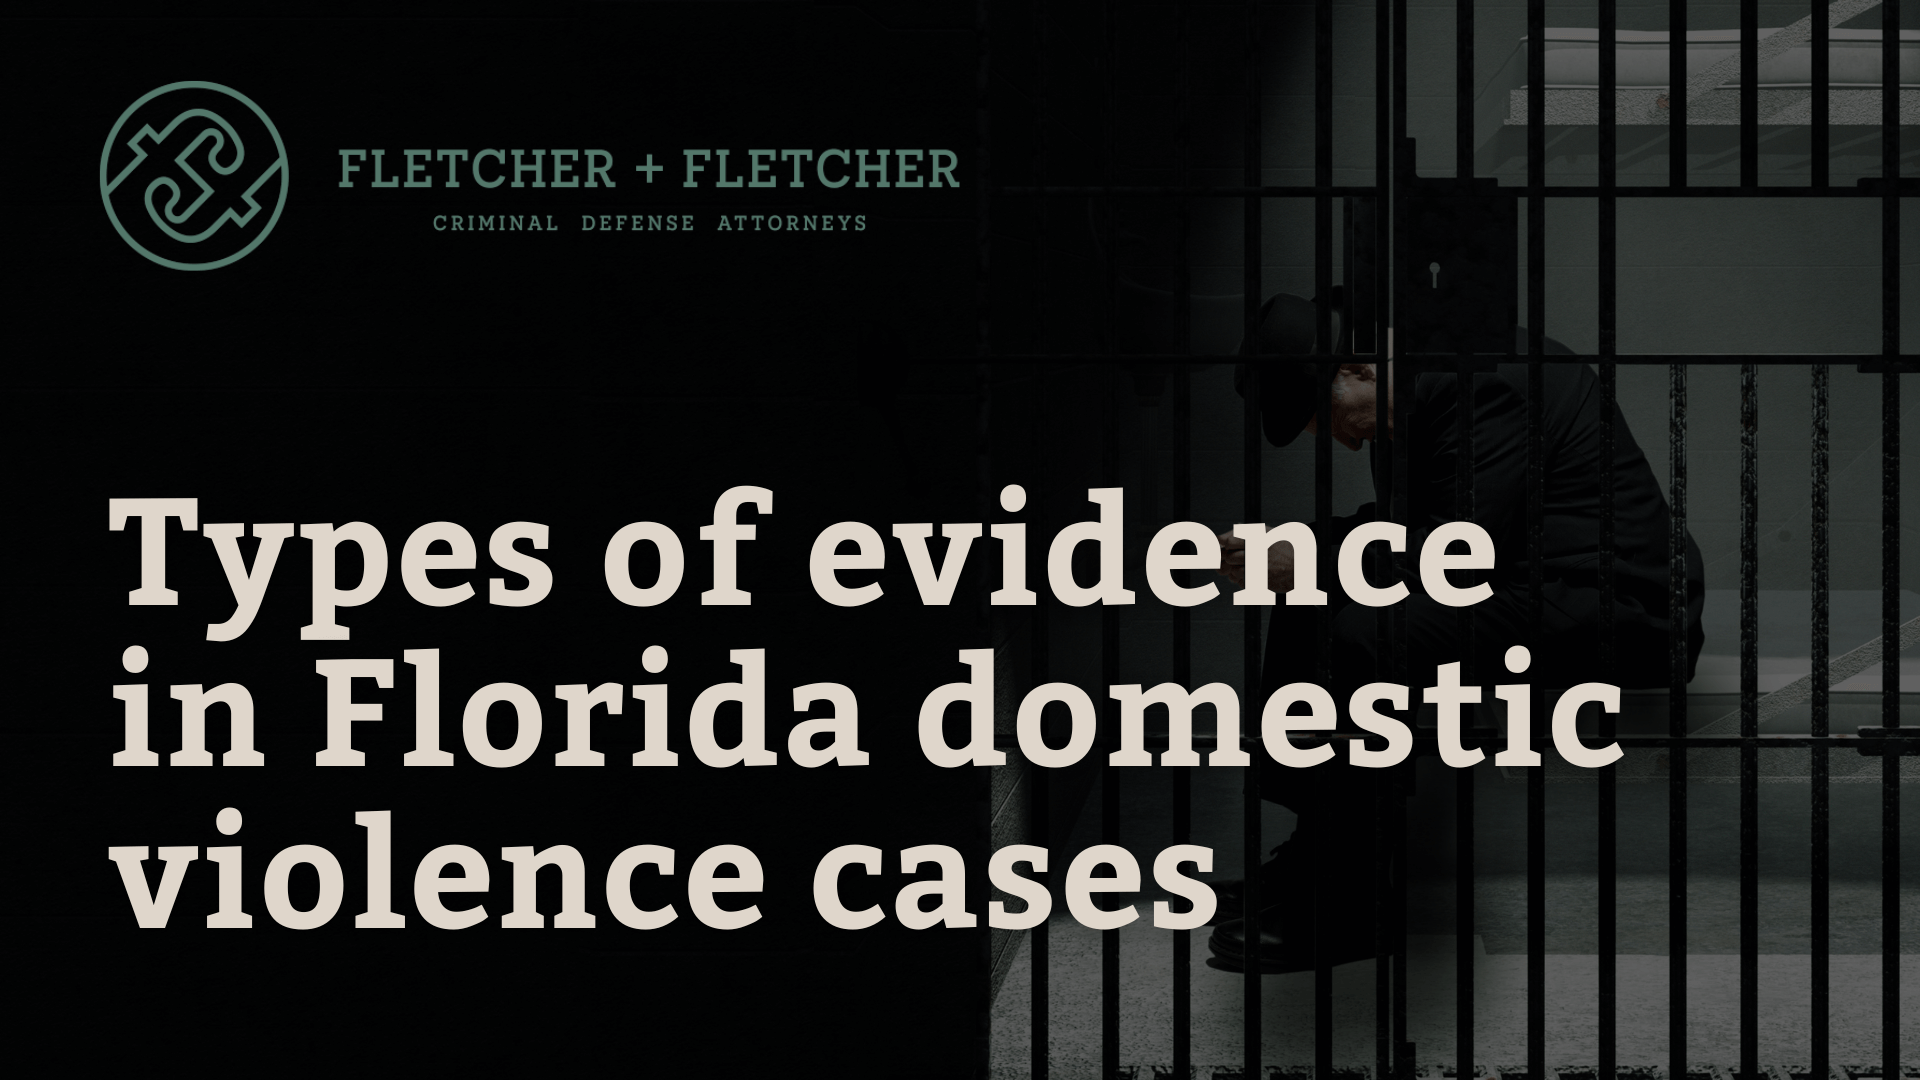 Types of evidence in Florida domestic violence cases - Fletcher Fletcher st petersburg Florida criminal defense lawyers